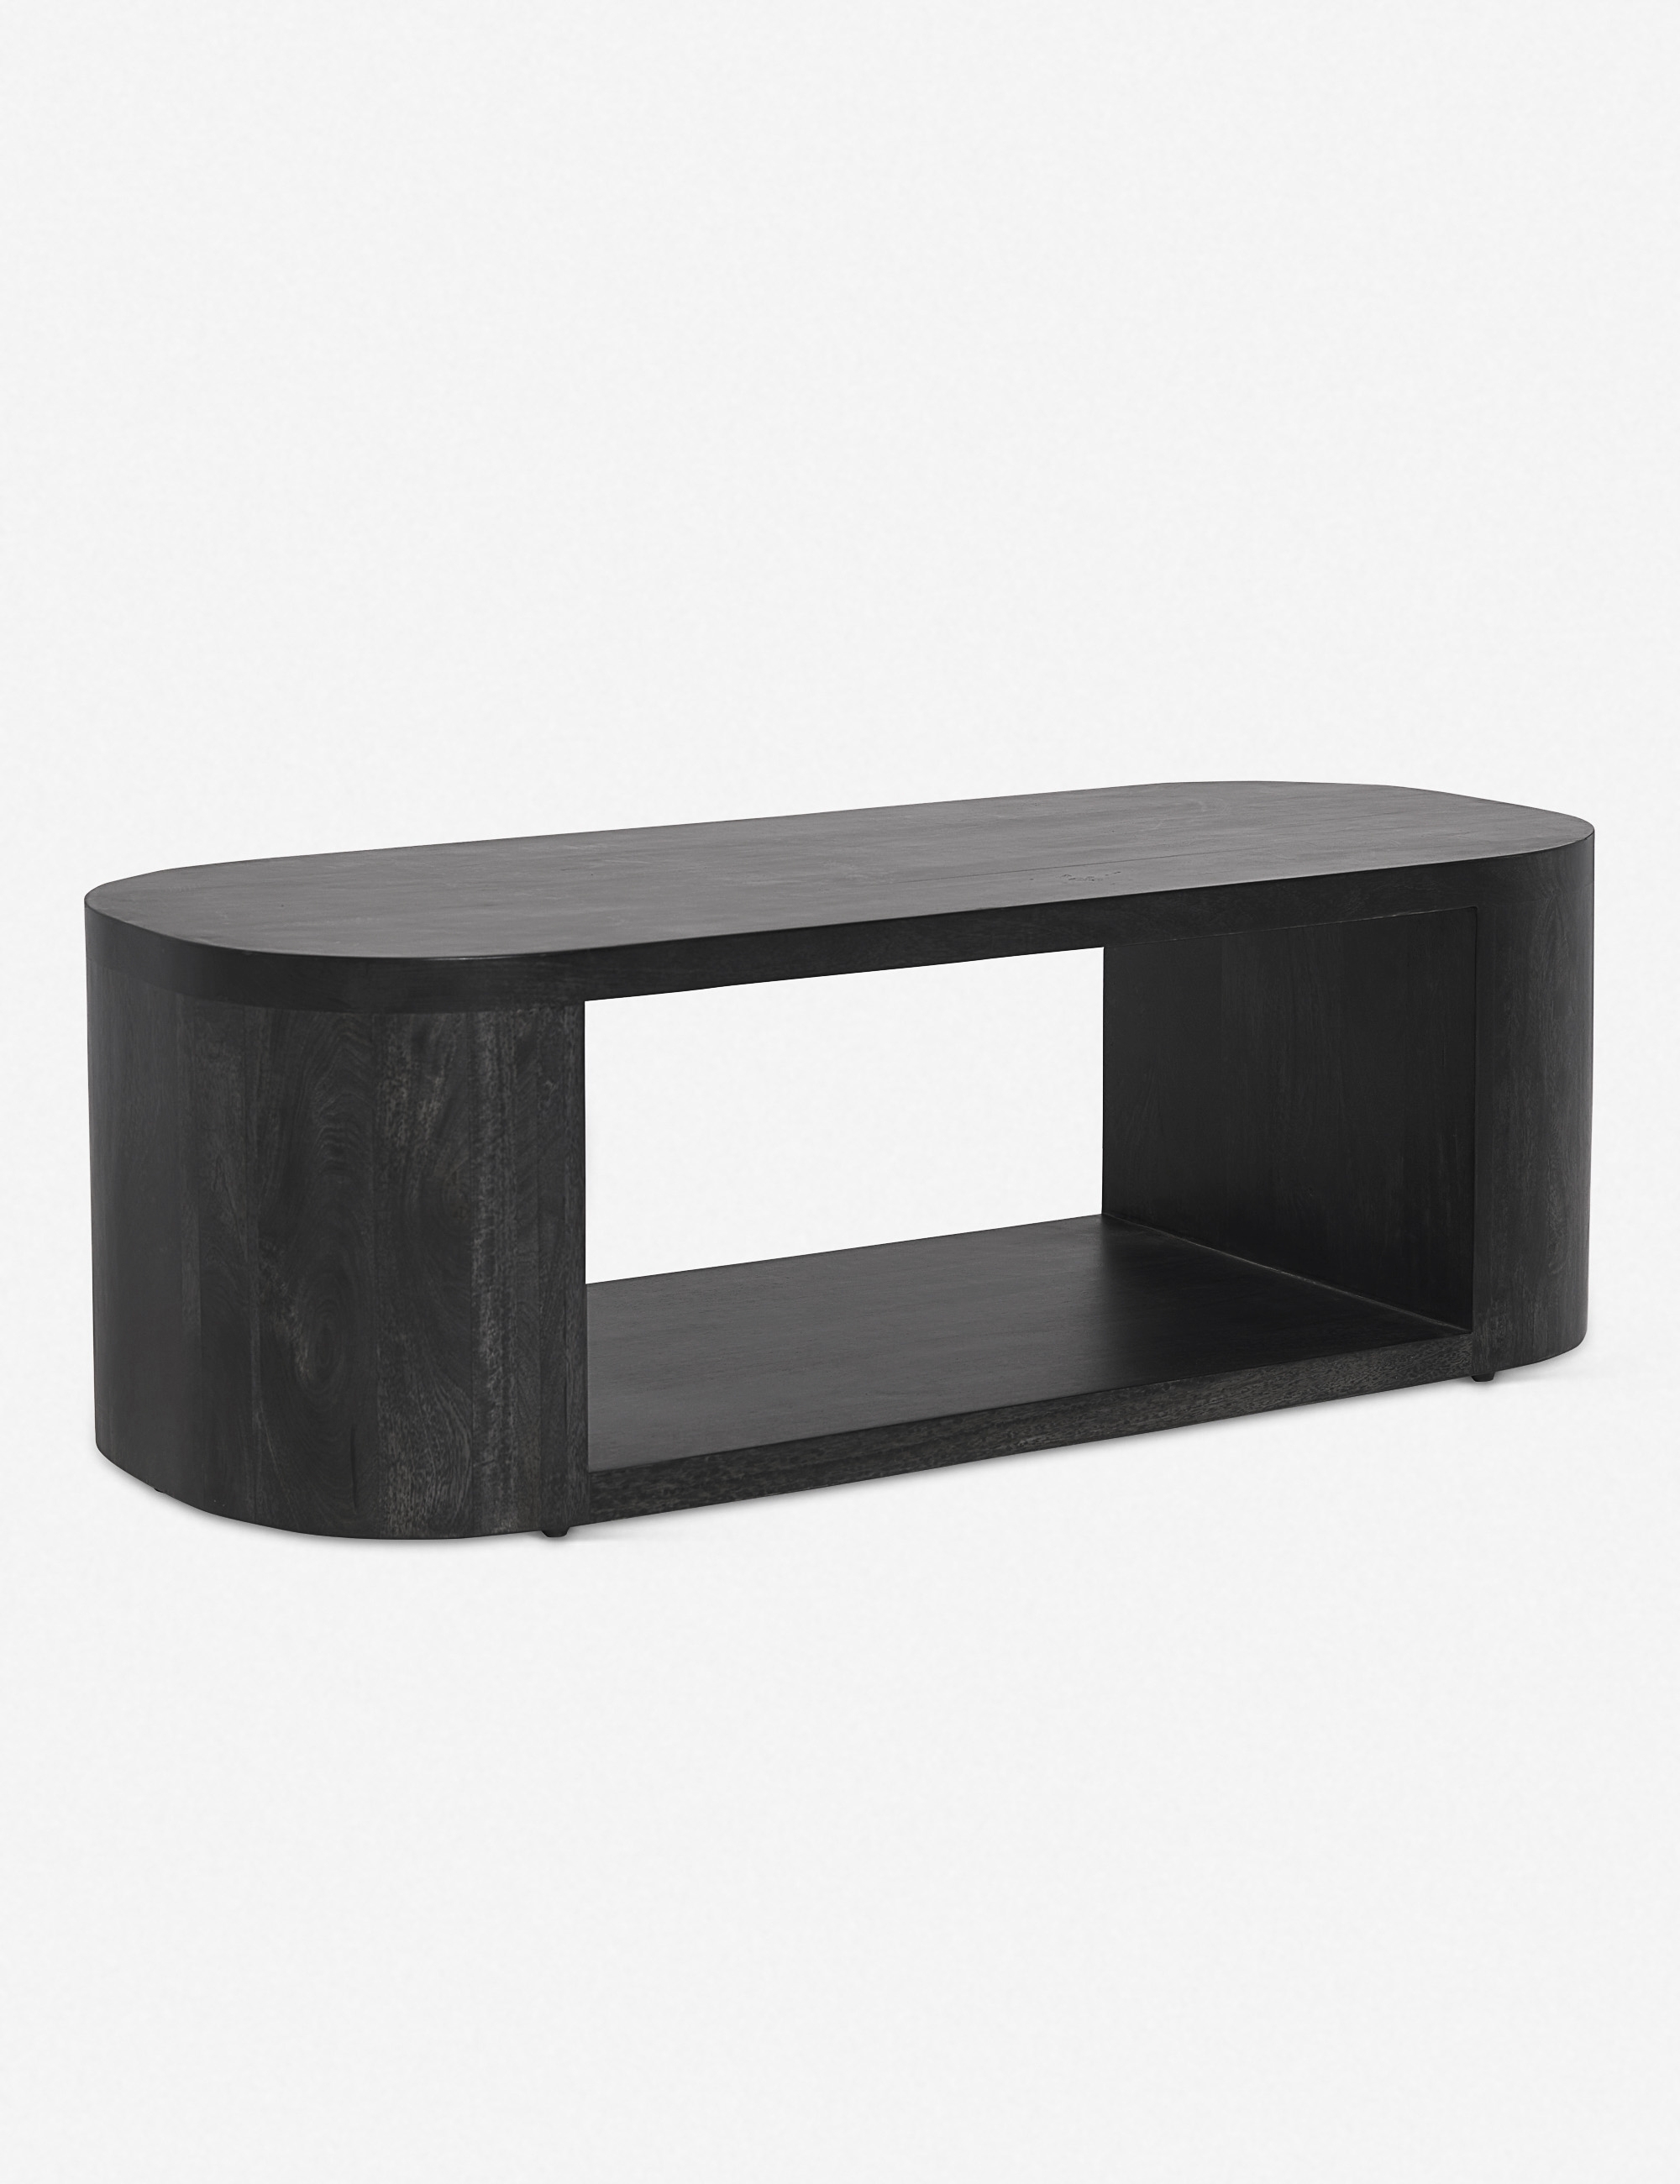 Luna Oval Coffee Table, Black - Image 1